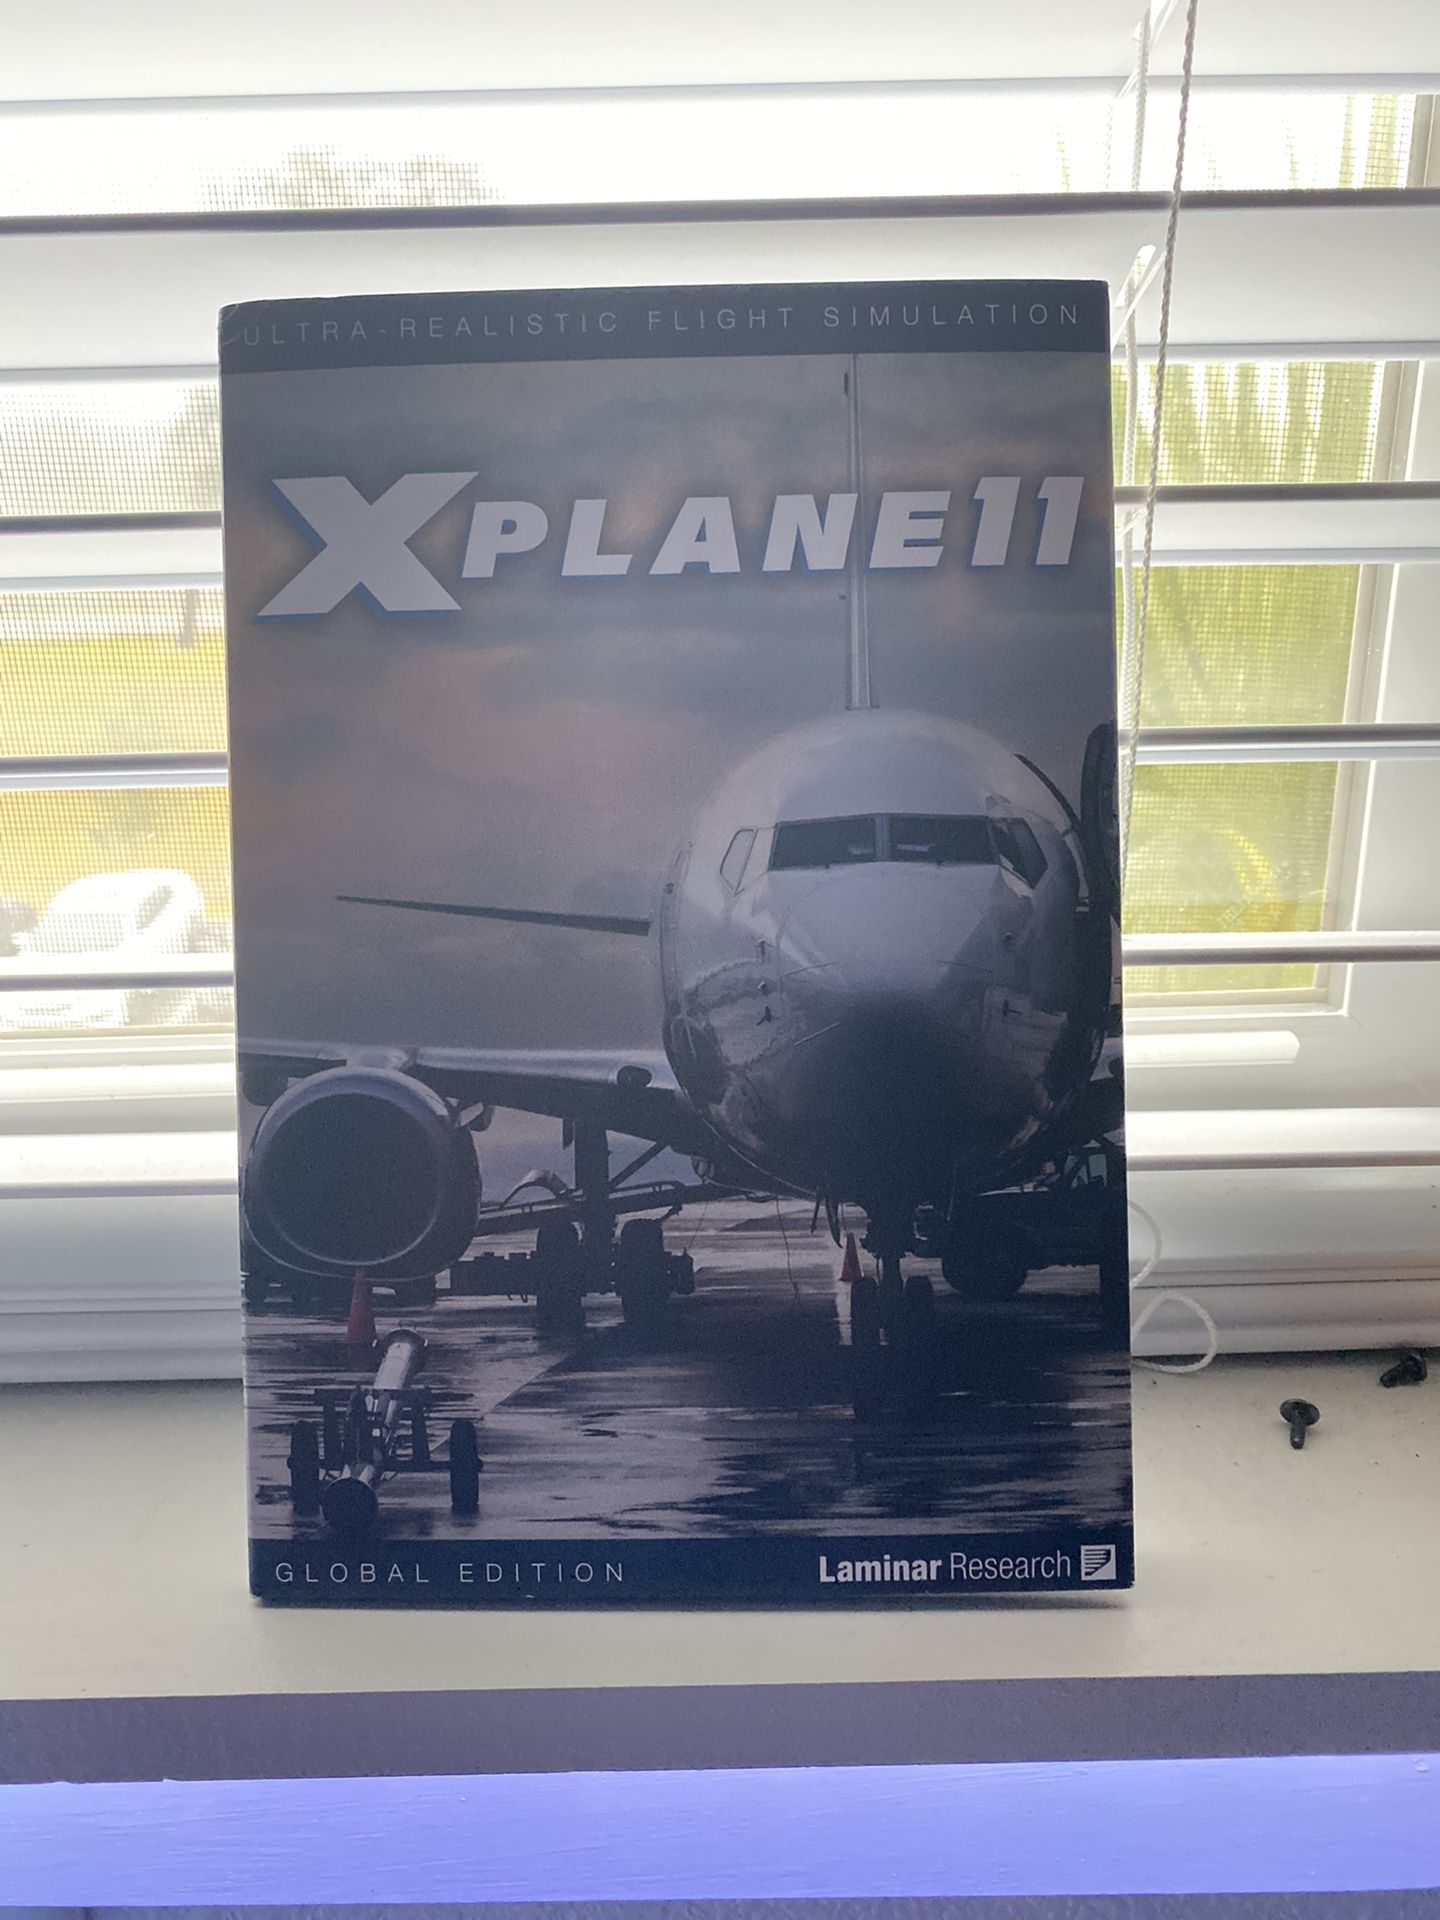 Xplane 11 Flight Simulator